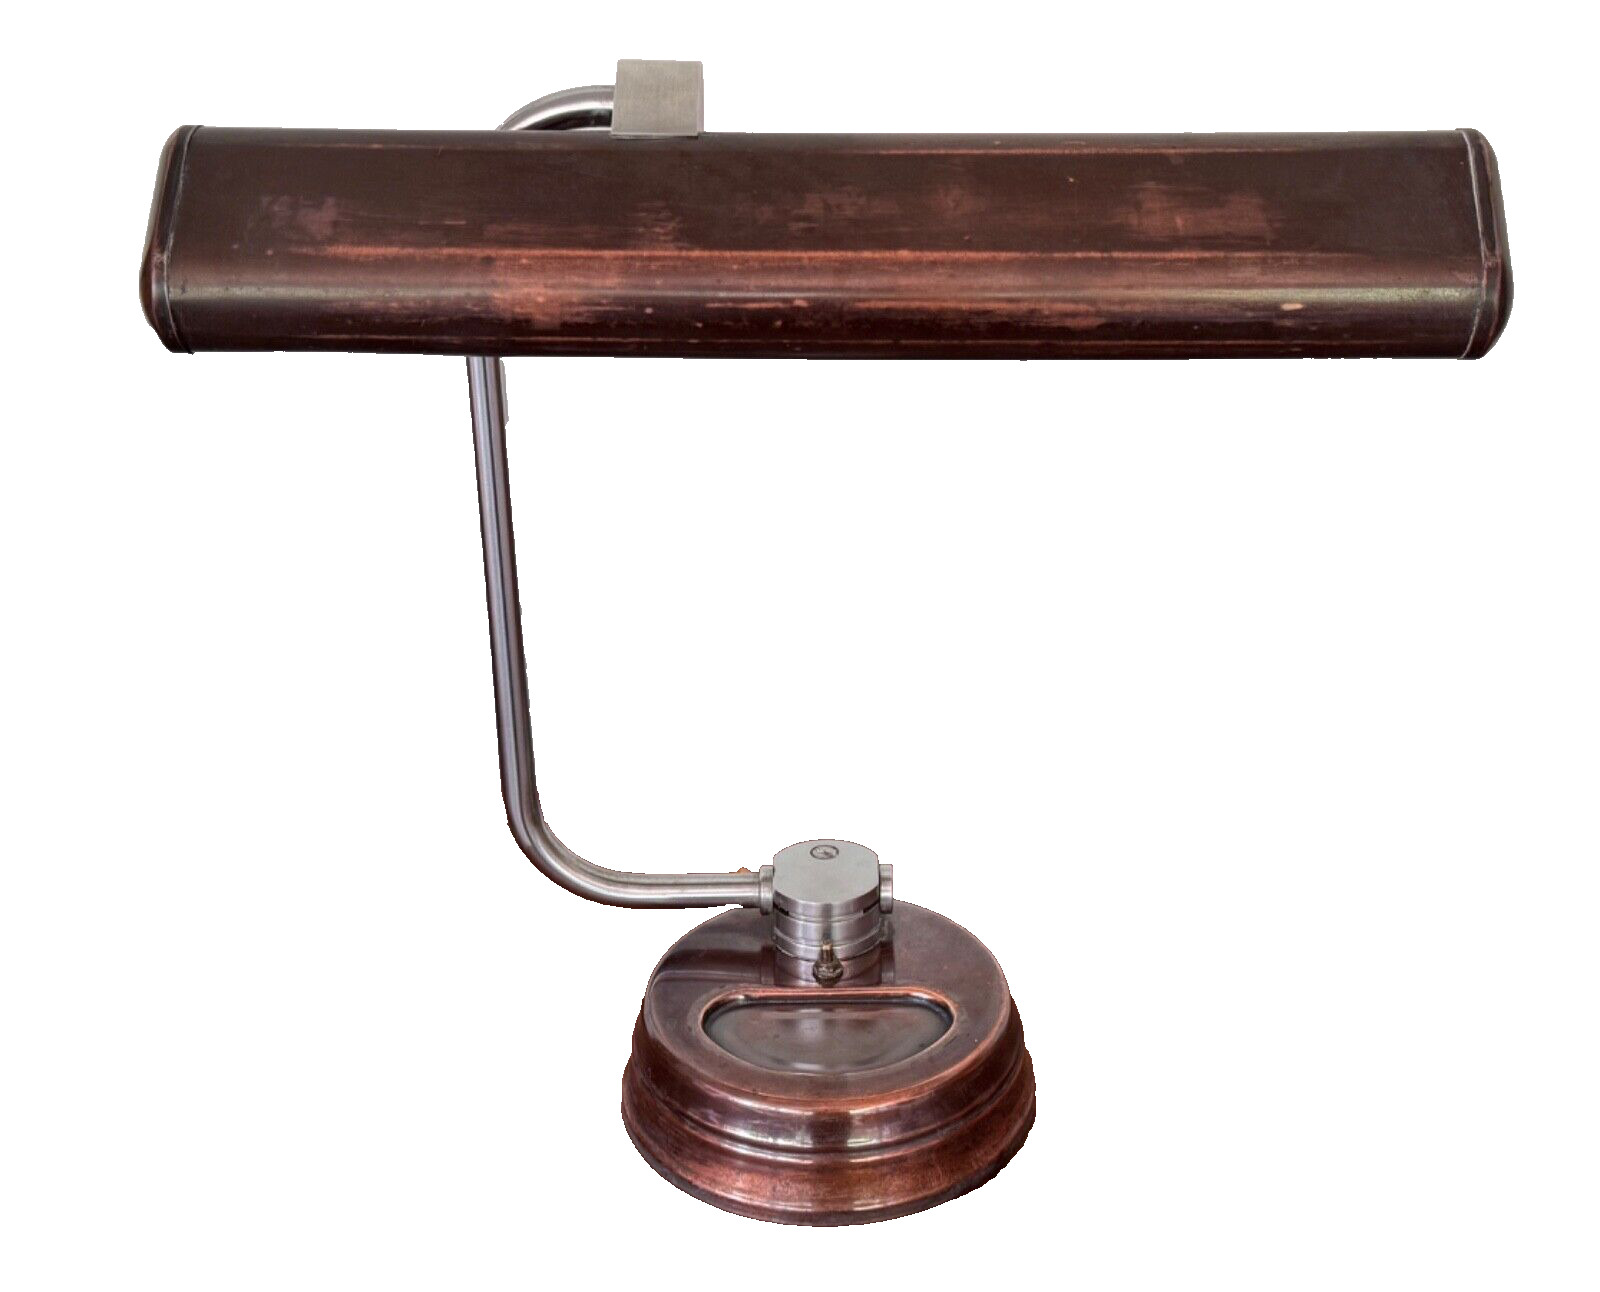 Faries Art Deco Machine Age Industrial Adjustable Chrome Copper Table Desk Lamp